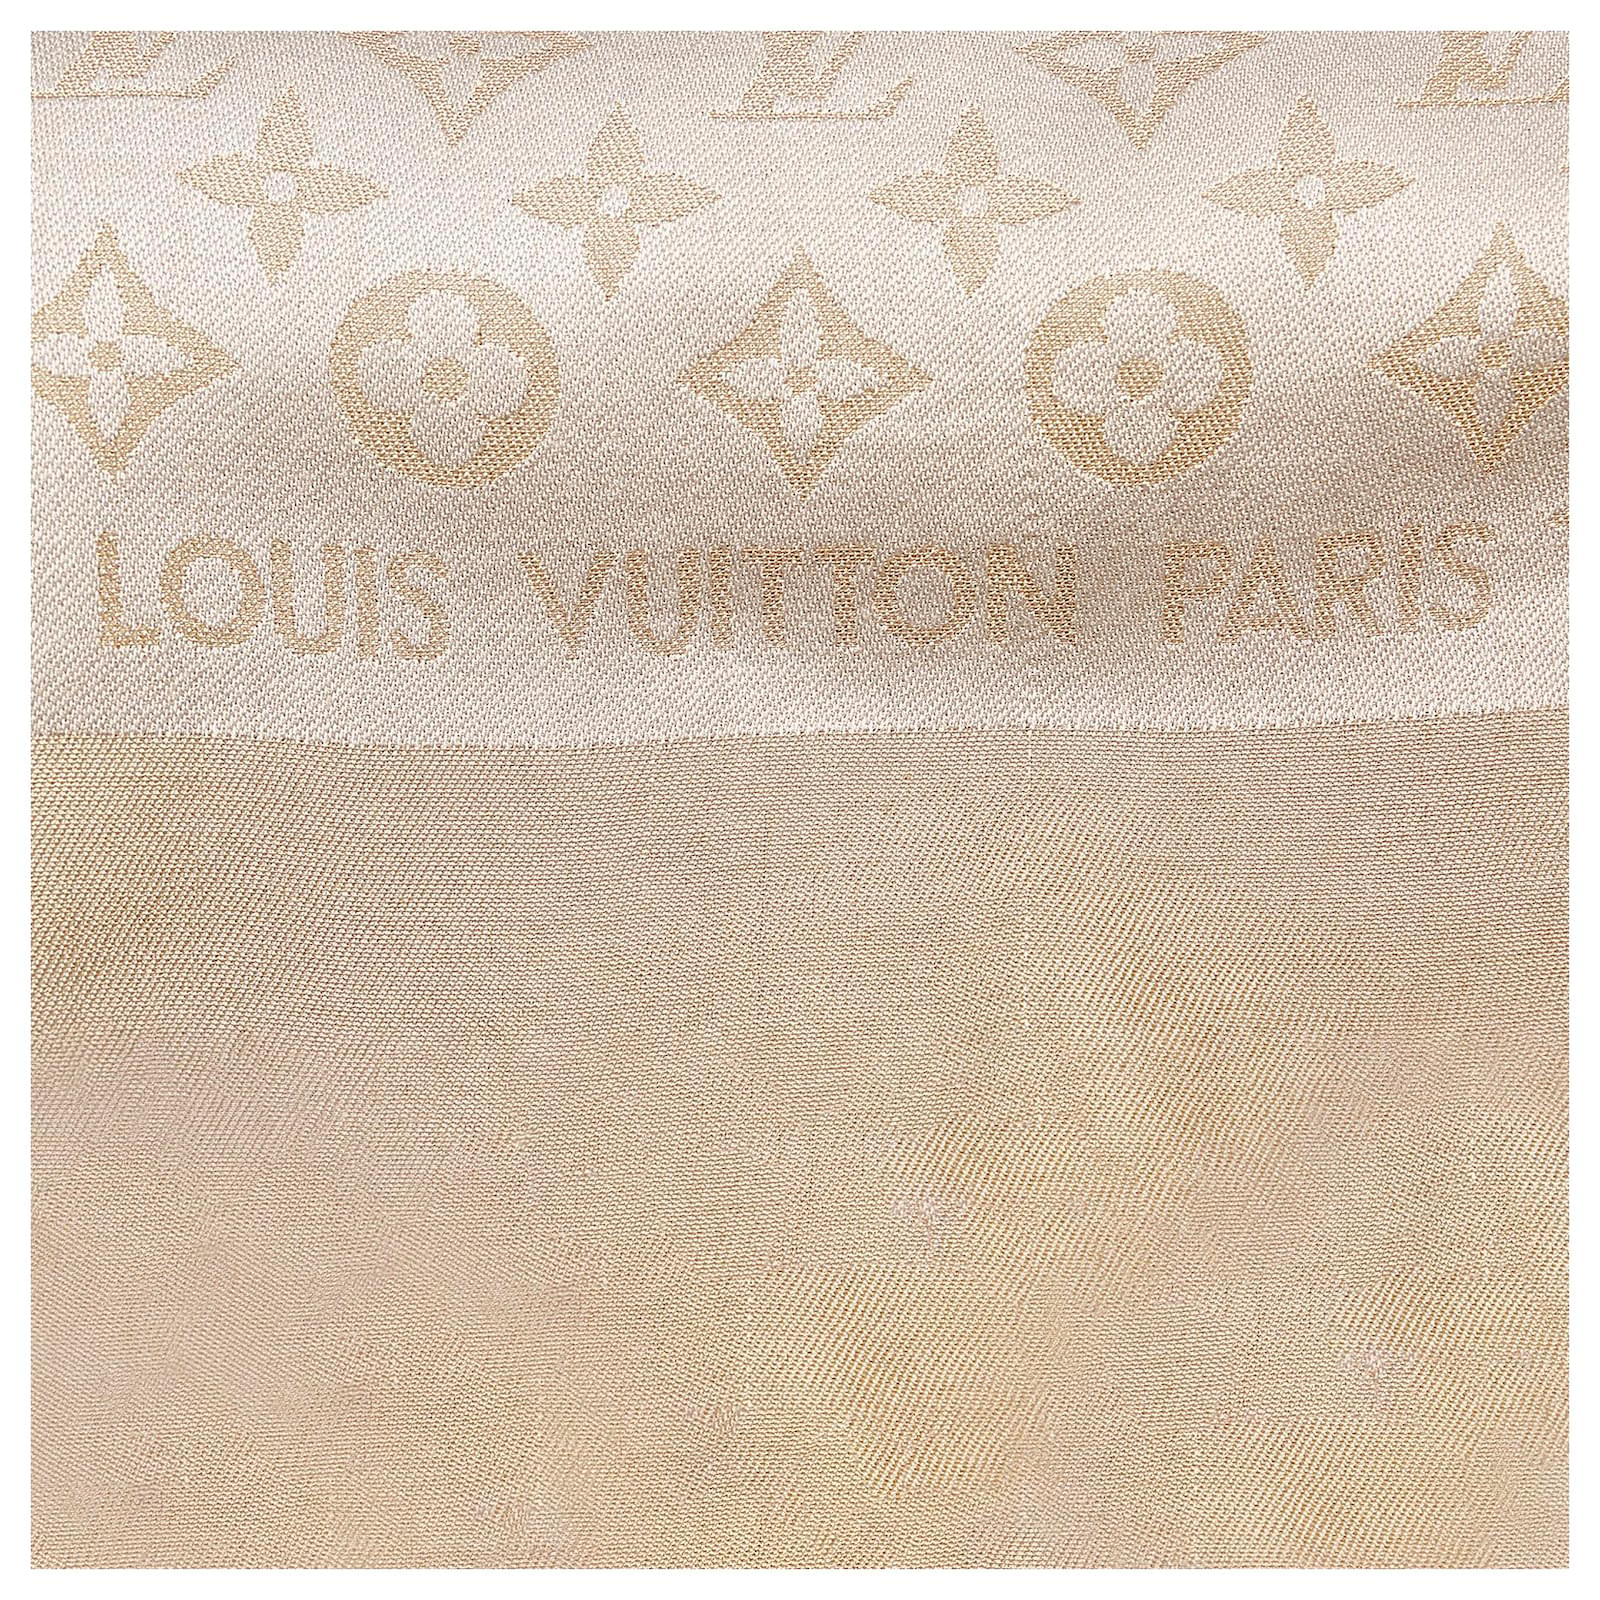 LOUIS VUITTON Silk Monogram Minimalle Square Scarf Brown 1287963